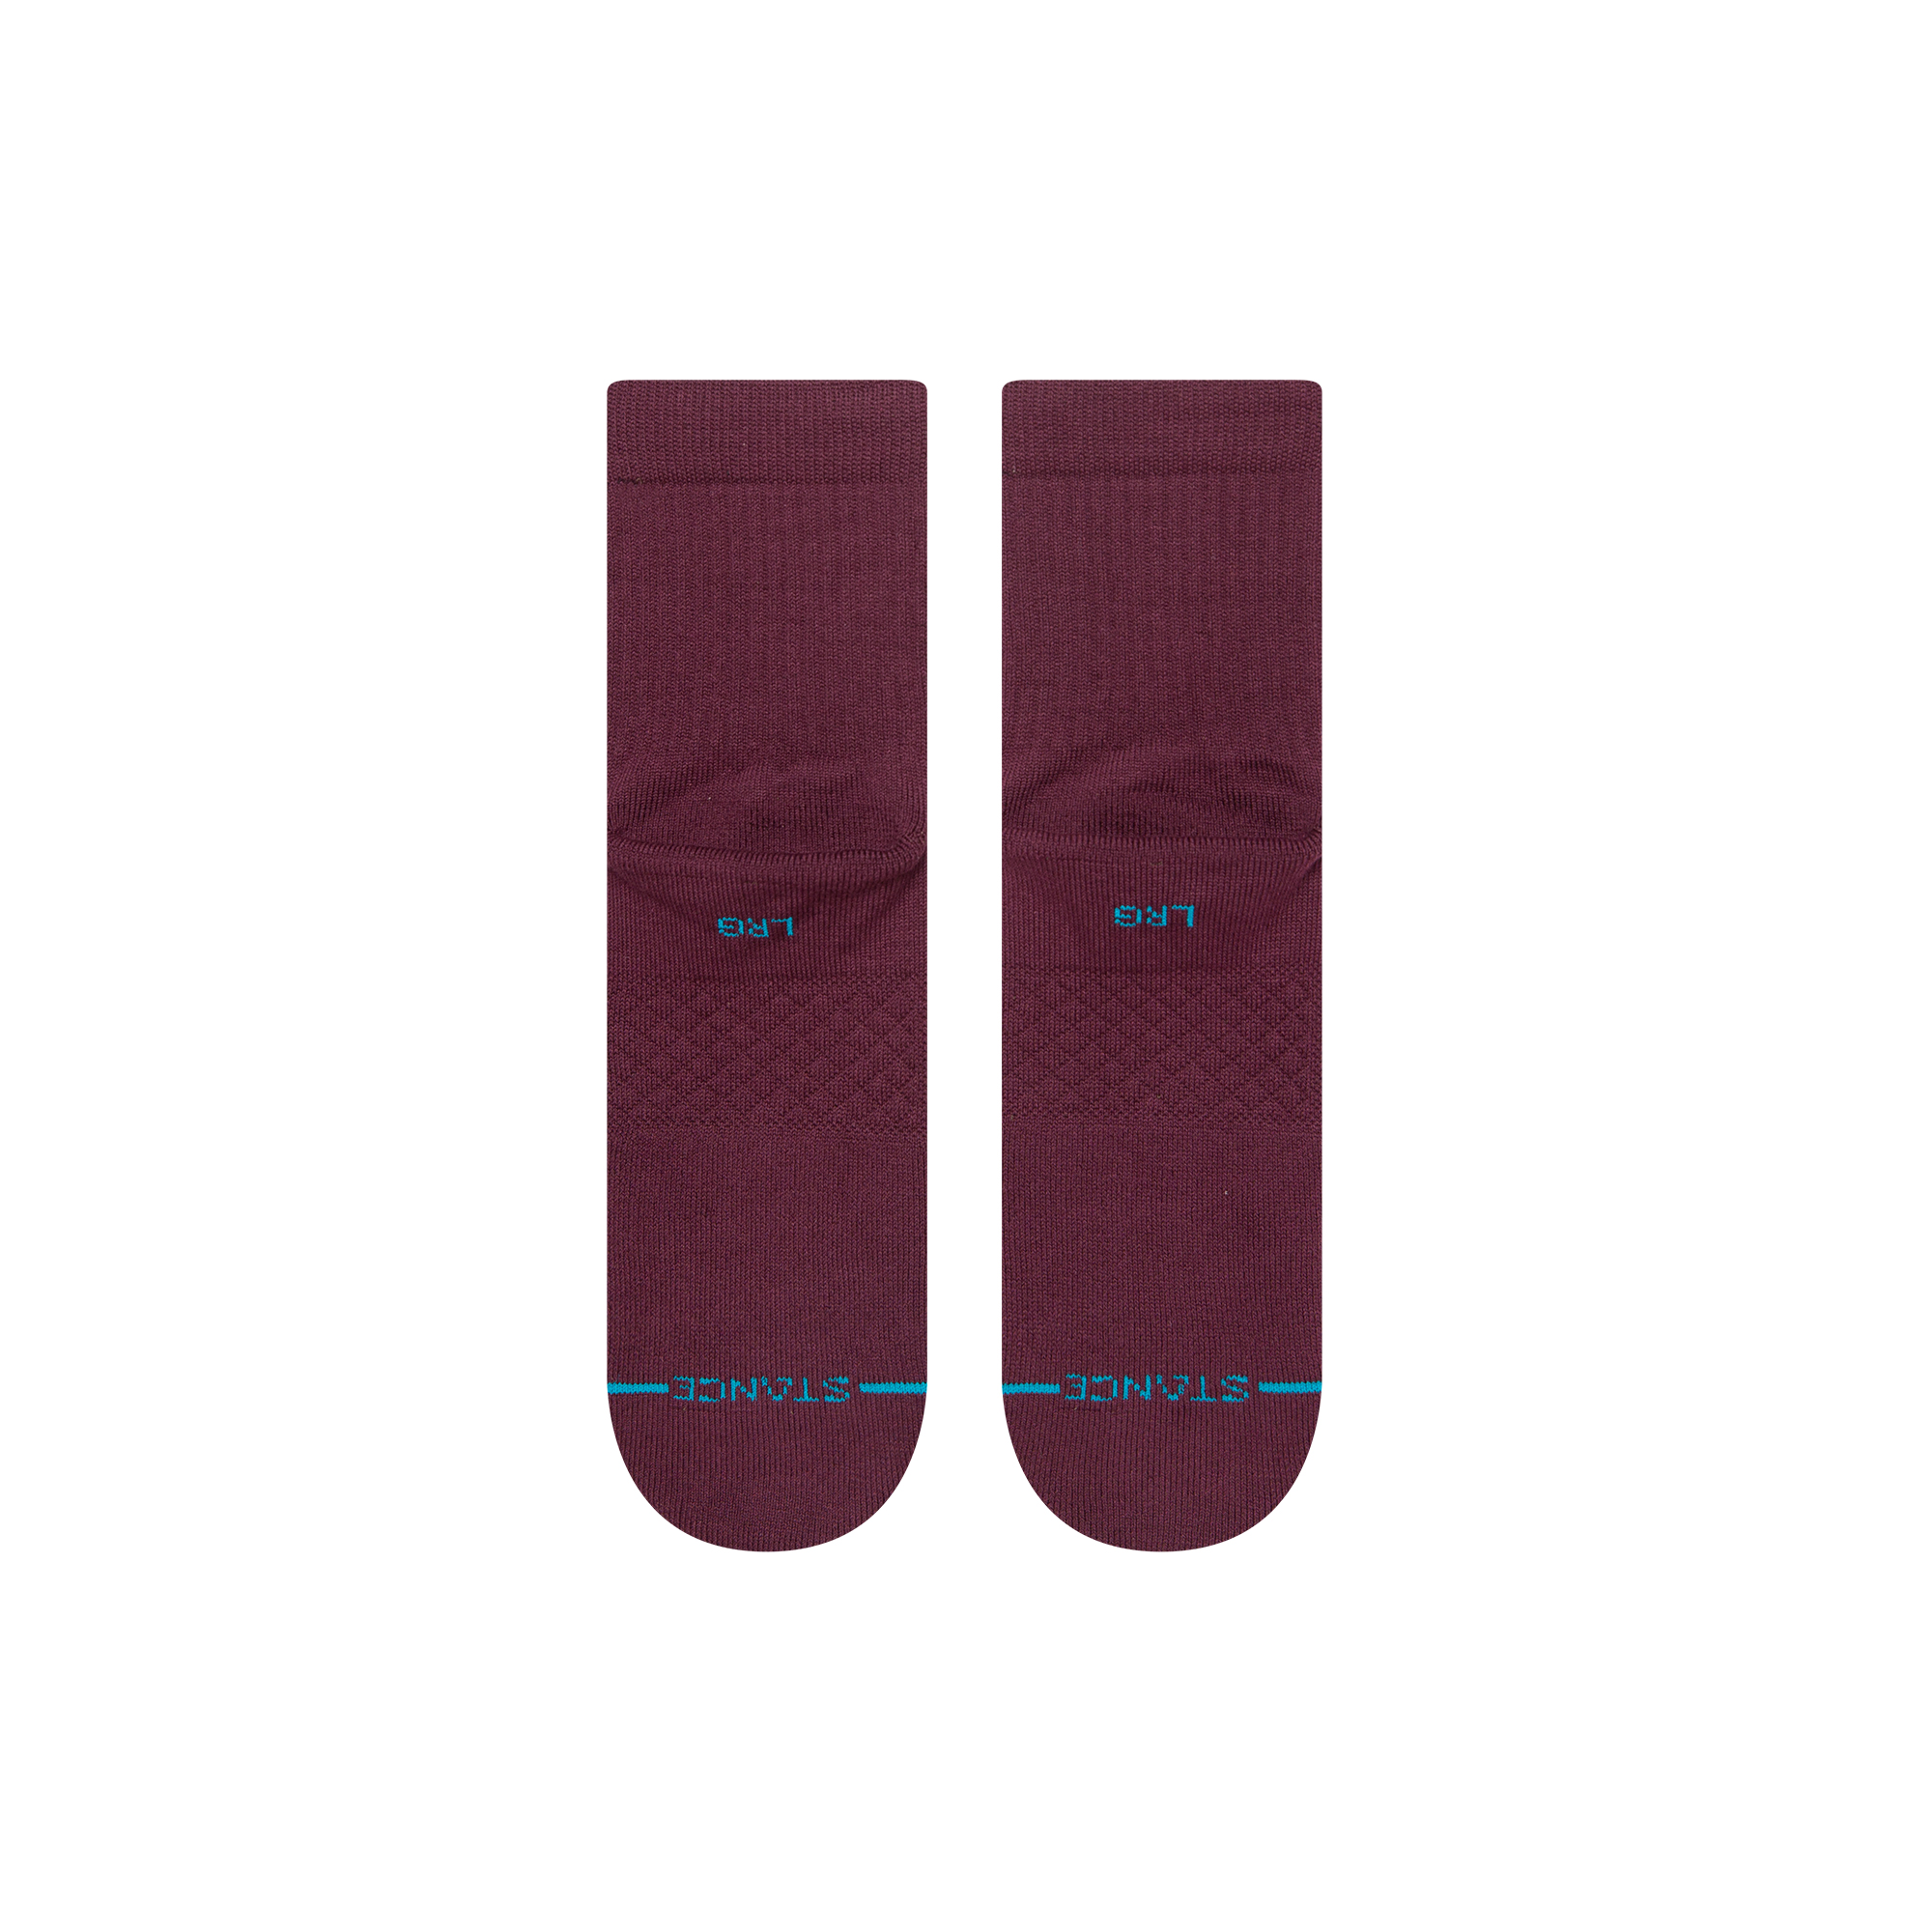 Stance Cotton Quarter Socks | eBay